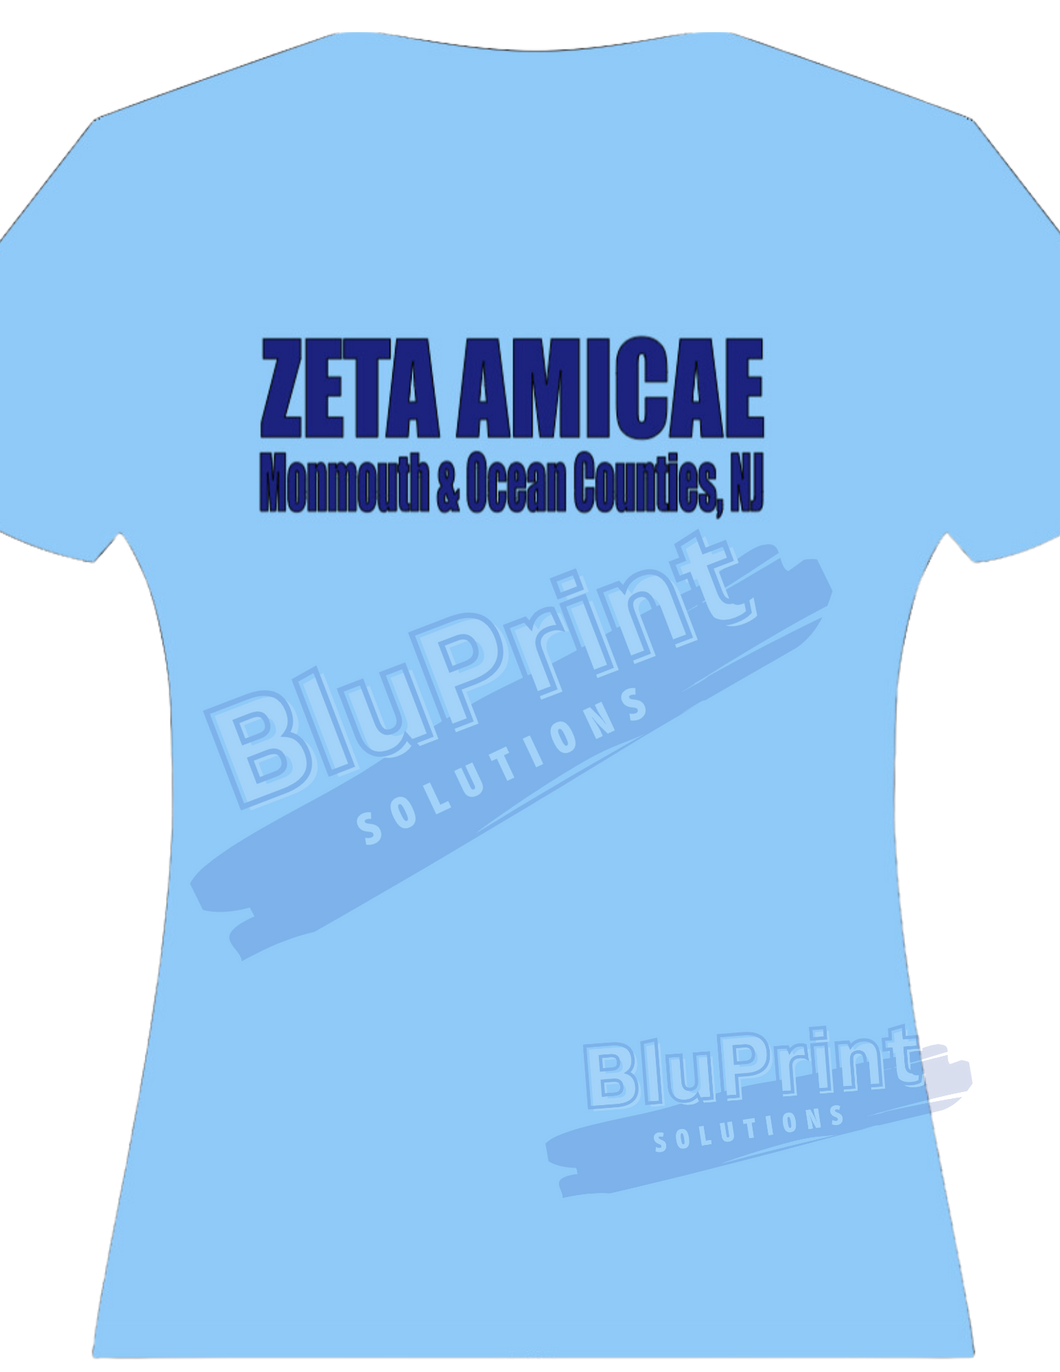 Zeta Amicae, Monmouth & Ocean Counties, NJ